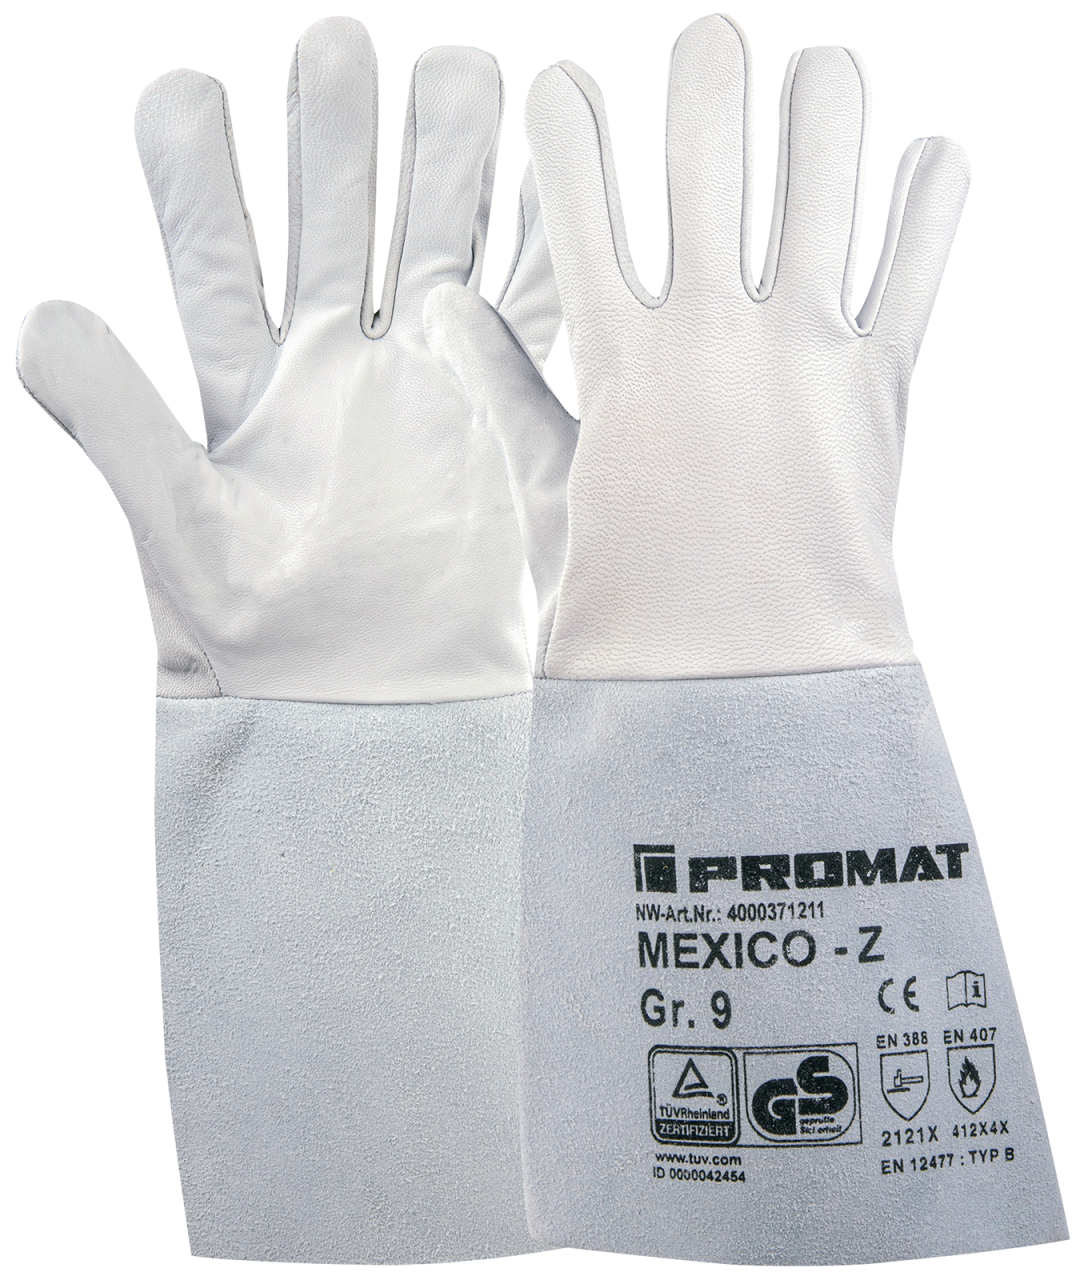 Schweißerhandschuhe Mexico Z Größe 10 grau Ziegennappa-/Spaltleder EN 388 Kategorie II